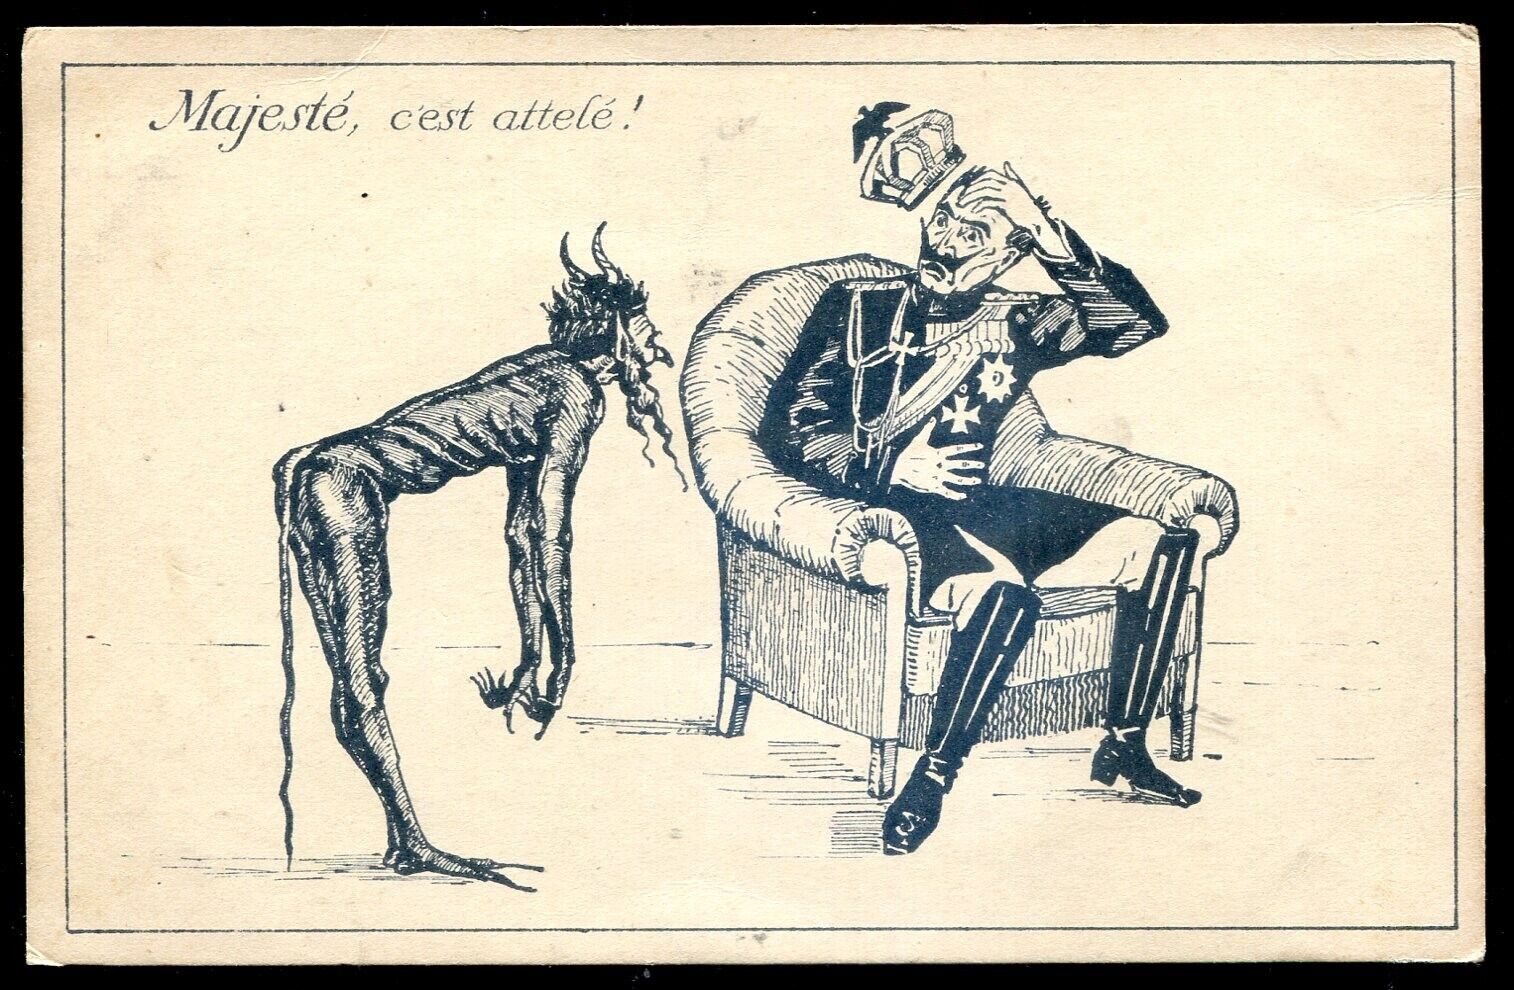 Artist Postcard 1910s Politics Caricature German Kaiser Devil